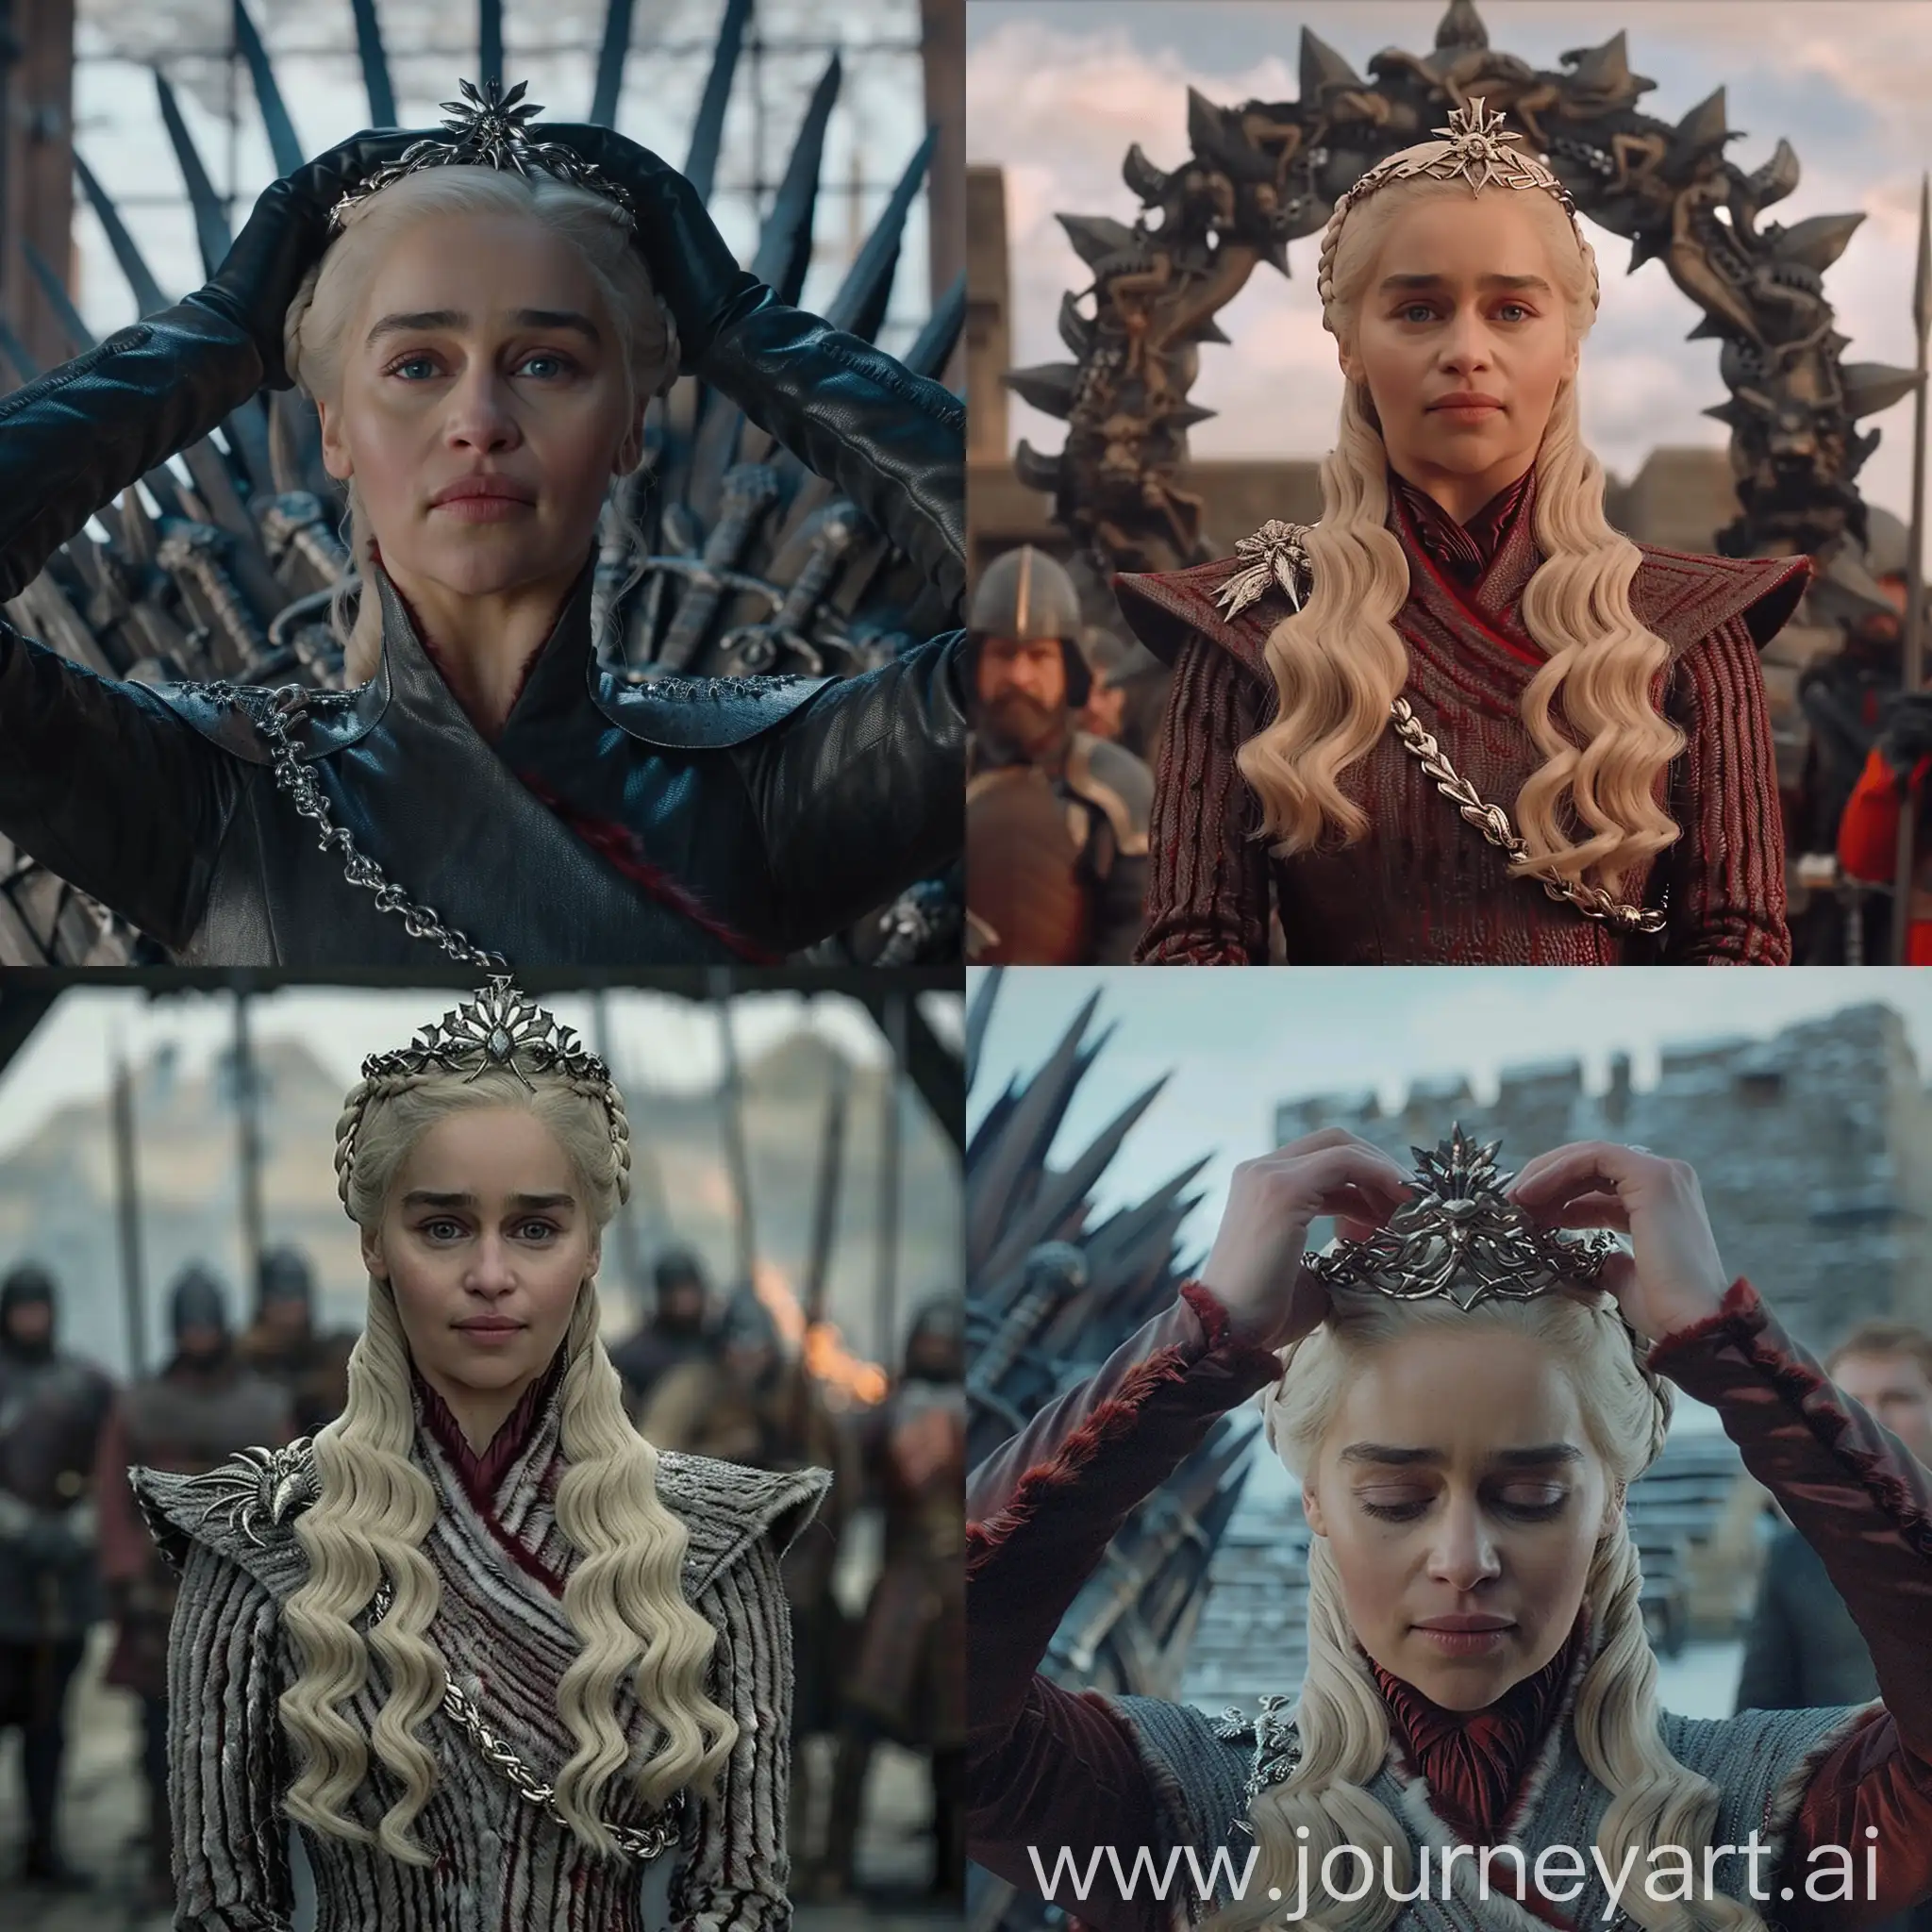 Daenerys-Crowned-Warrior-Queen-Powerful-Portrait-Art